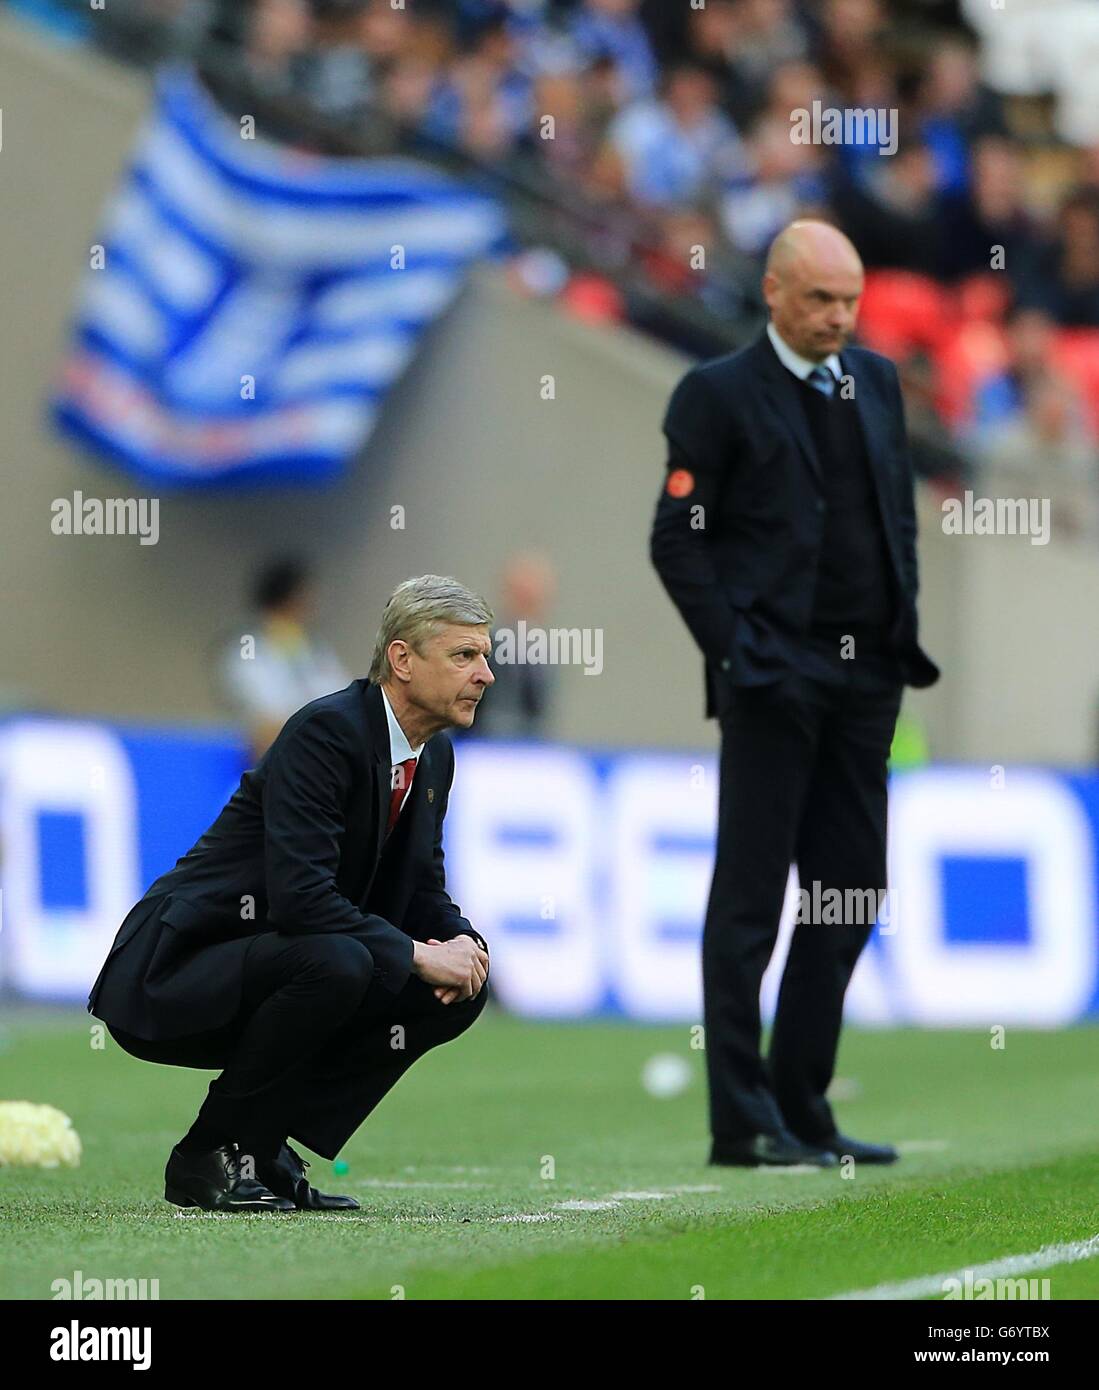 Arsenal's manager Arsene Wenger and Wigan Athletic's manager Uwe Rosler (background) on the touchline. Stock Photo